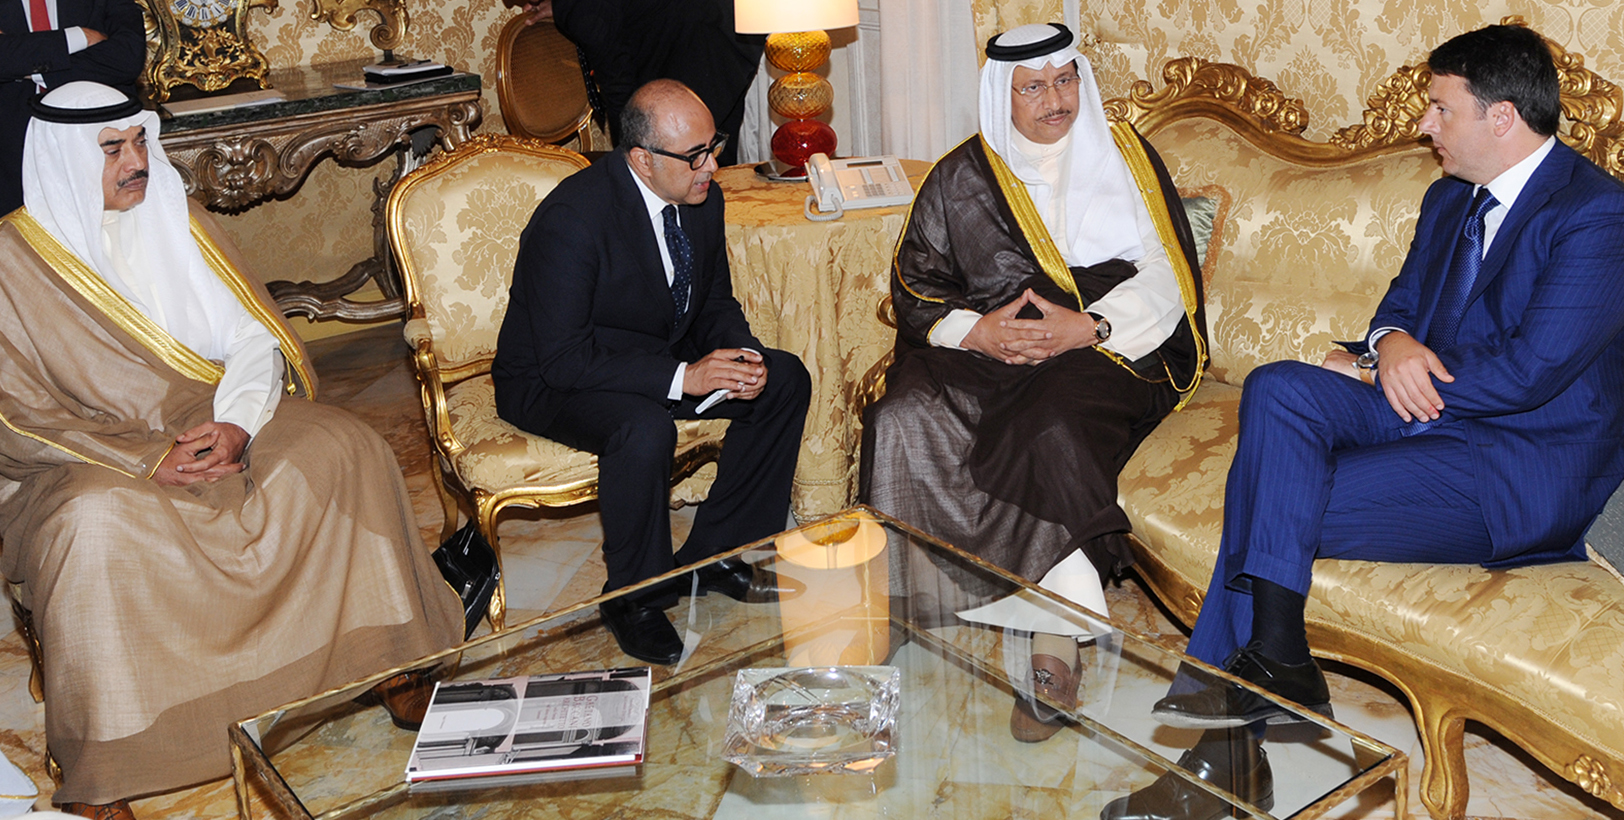 His Highness the Kuwaiti Prime Minister Sheikh Jaber Al-Mubarak Al-Hamad Al-Sabah with his Italian counterpart Matteo Renzi